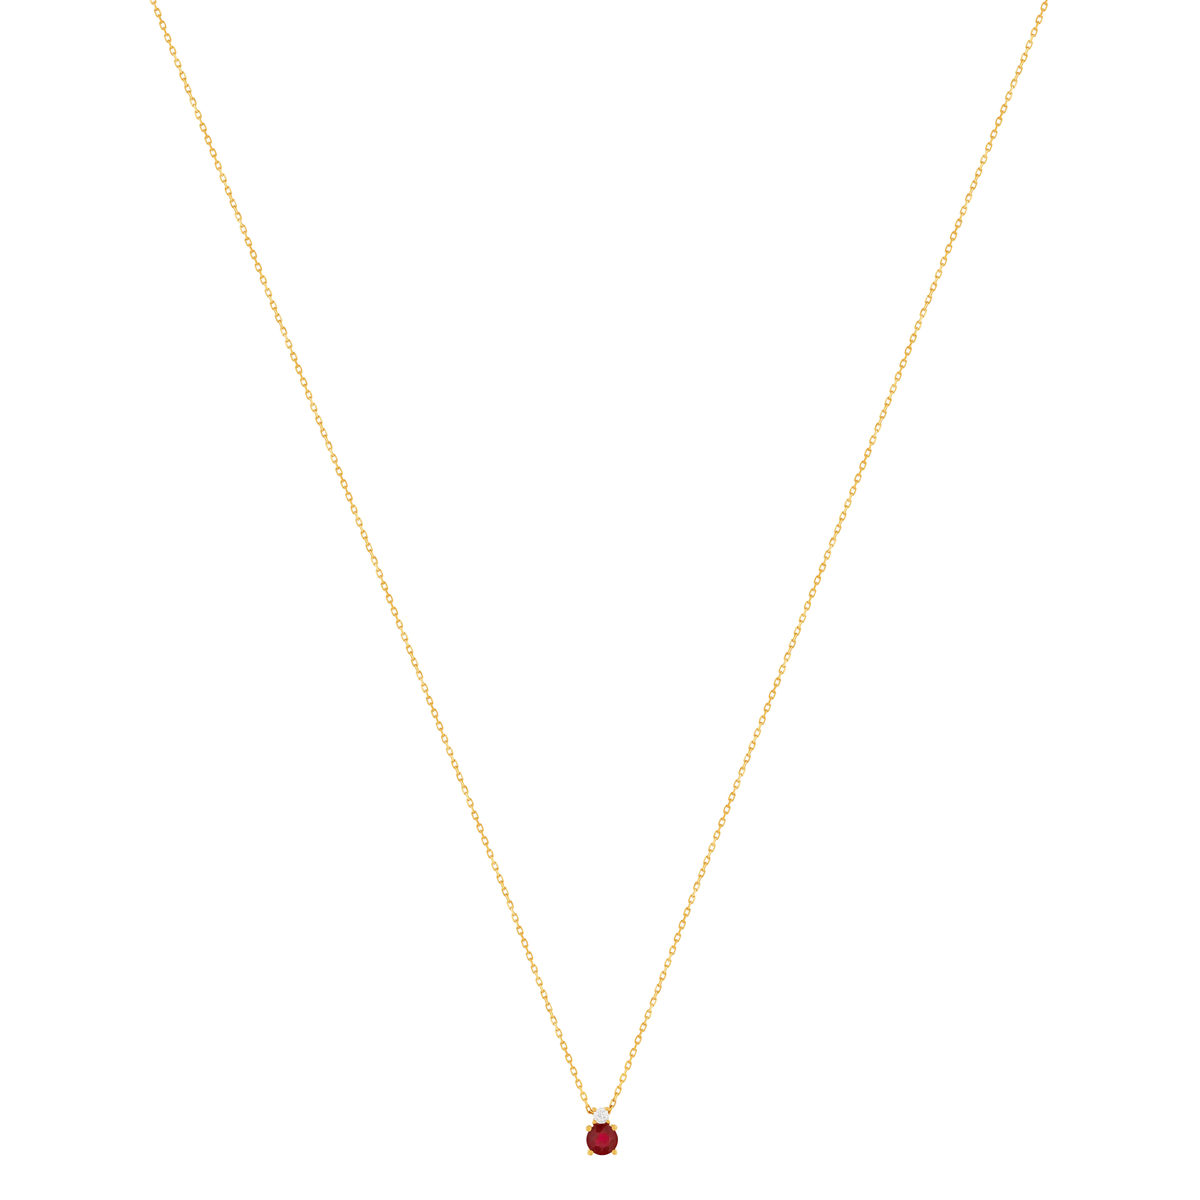 Collier or 375 jaune rubis zirconia, 45 cm - vue 2